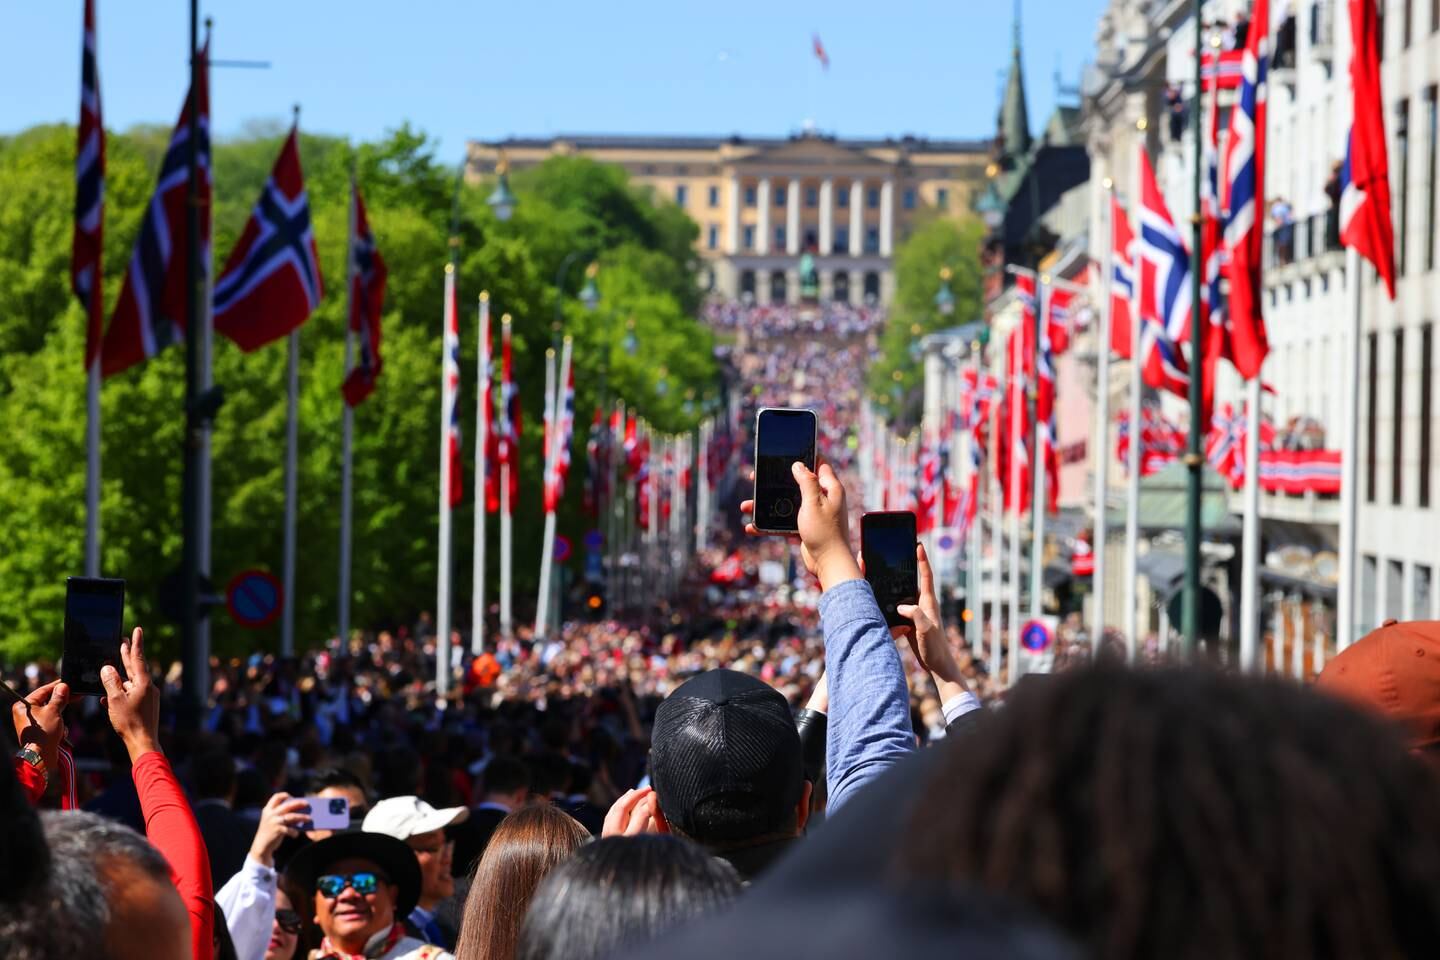 Bare i Sveits er det bedre levekår enn i Norge, her fra Karl Johan på 17. mai. 
Foto: Ørn E. Borgen / NTB